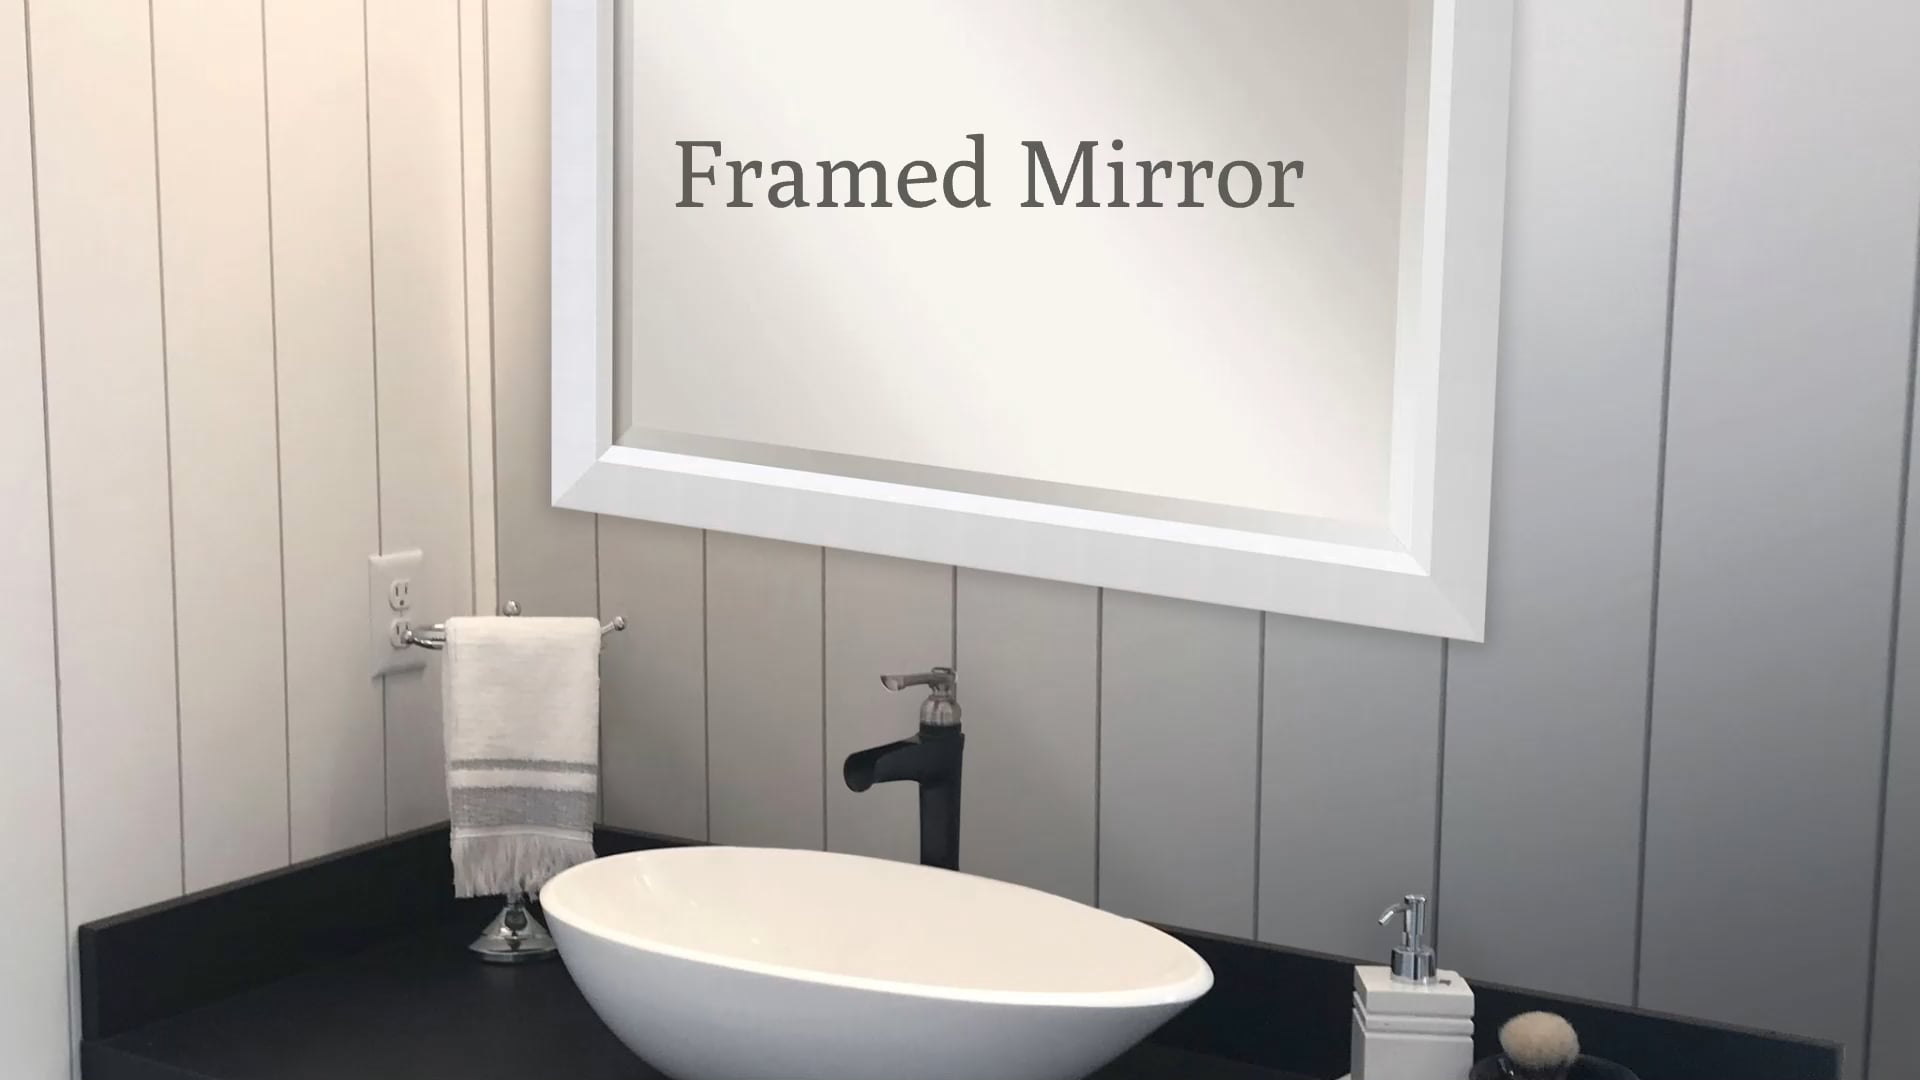 Blanco White Beveled Wood Bathroom Wall Mirror - 23.5 x 23.5 in.